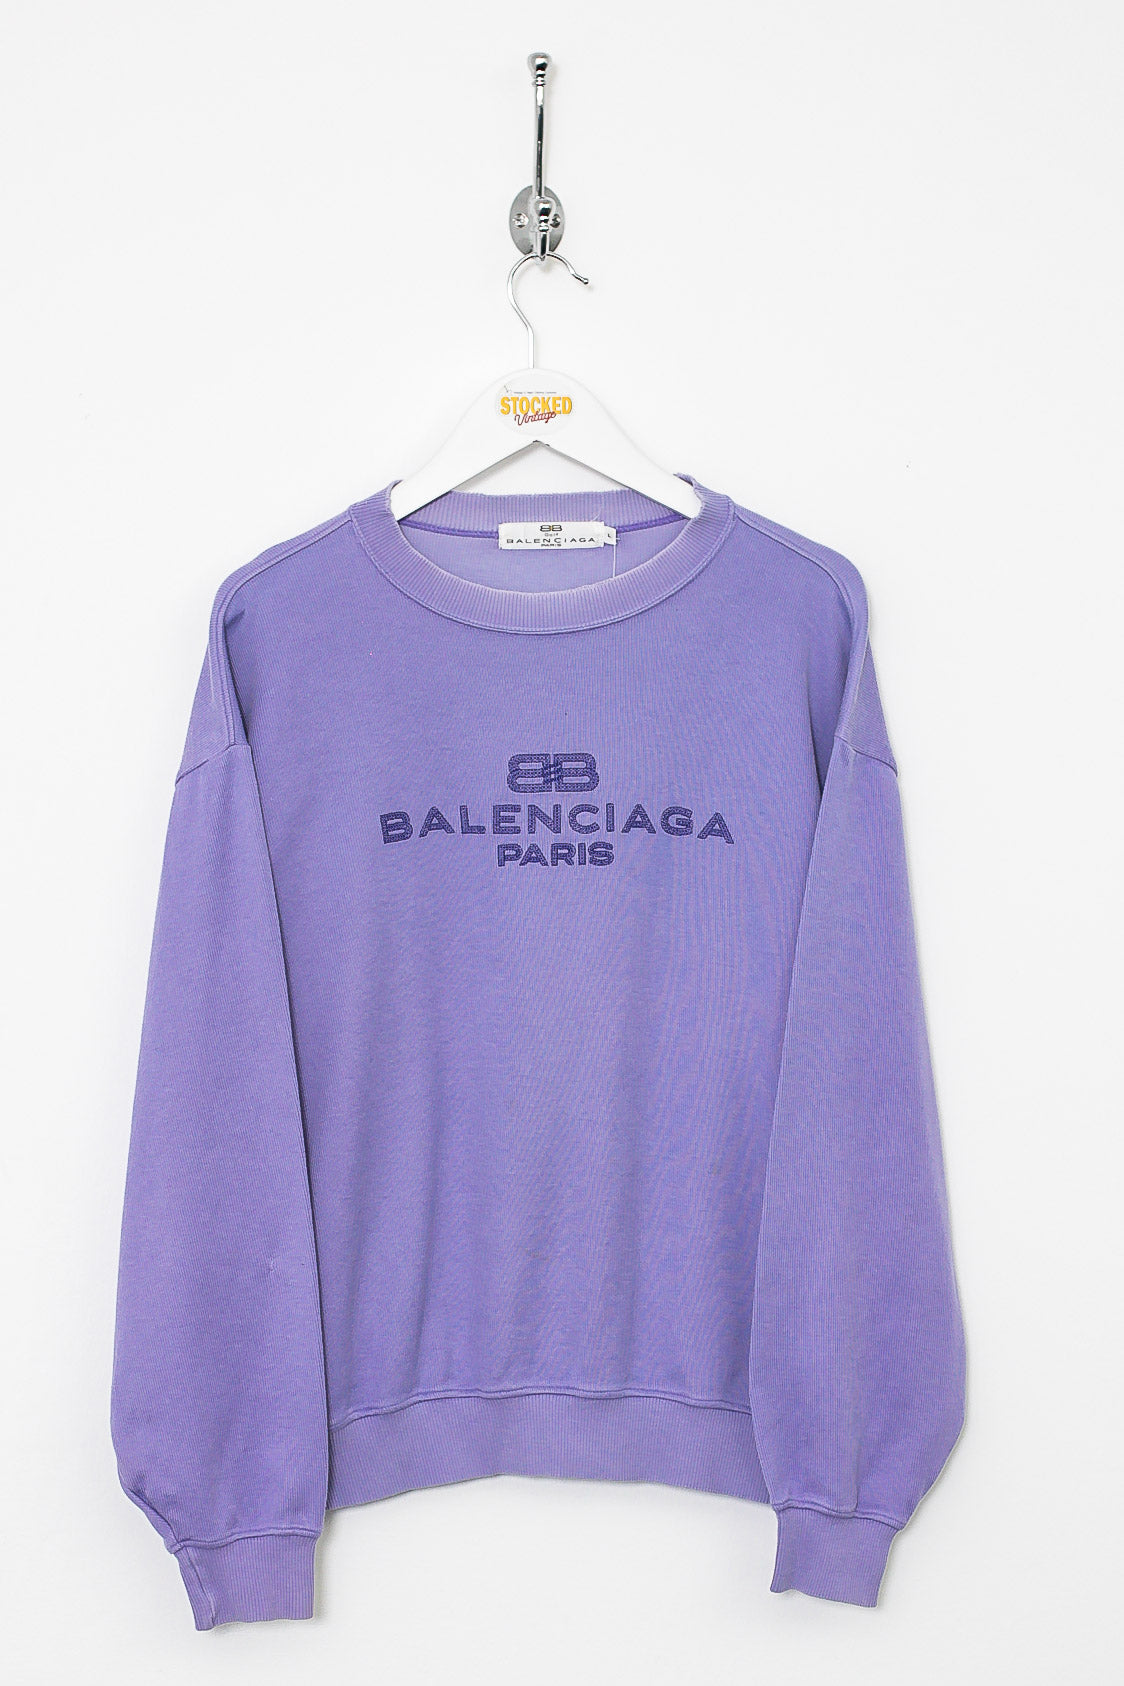 Womens 90s Balenciaga Sweatshirt (M)